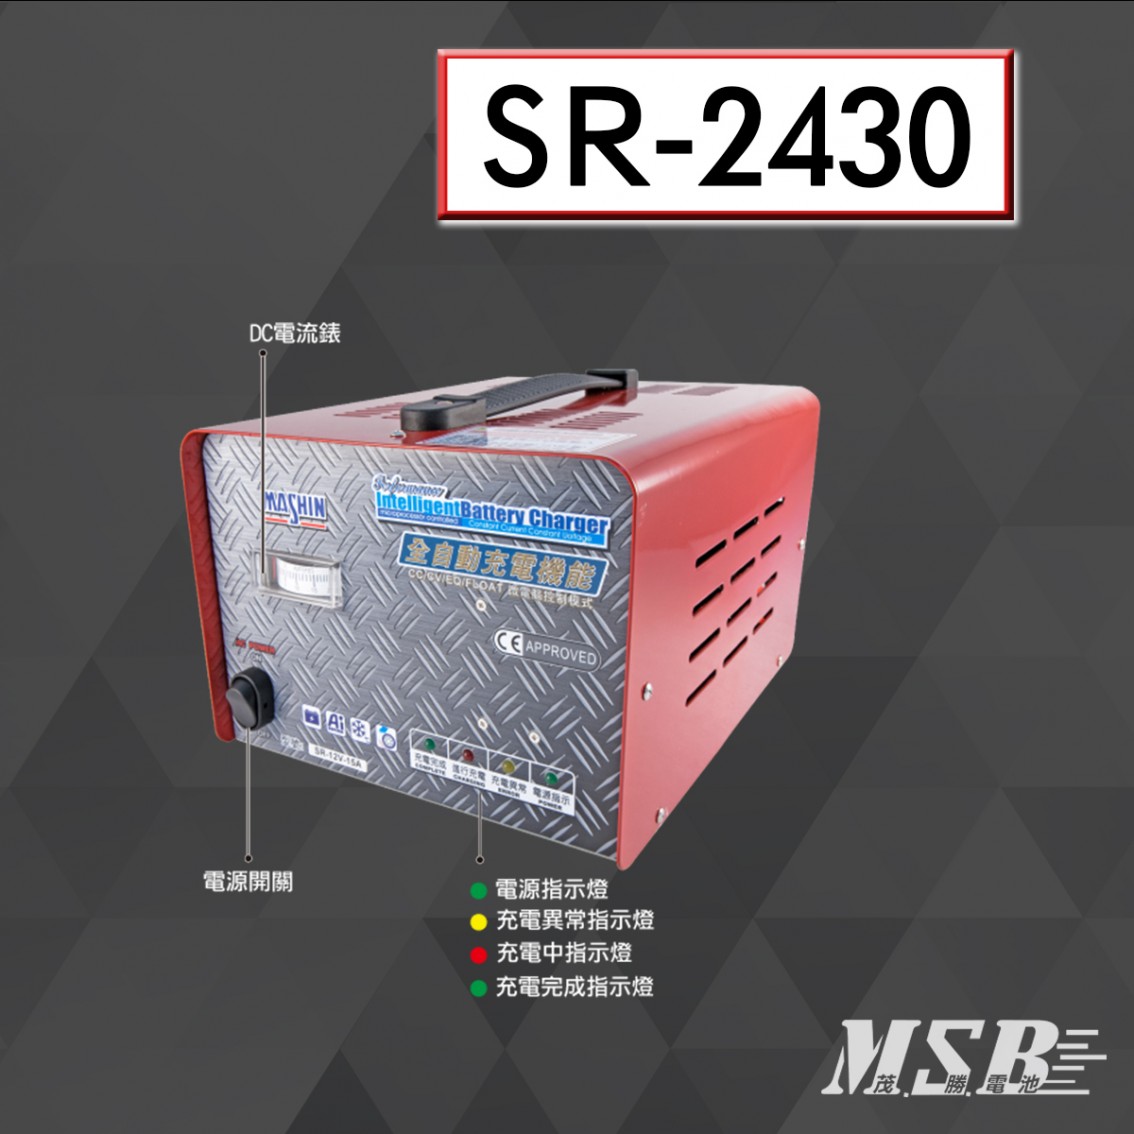 SR-2430